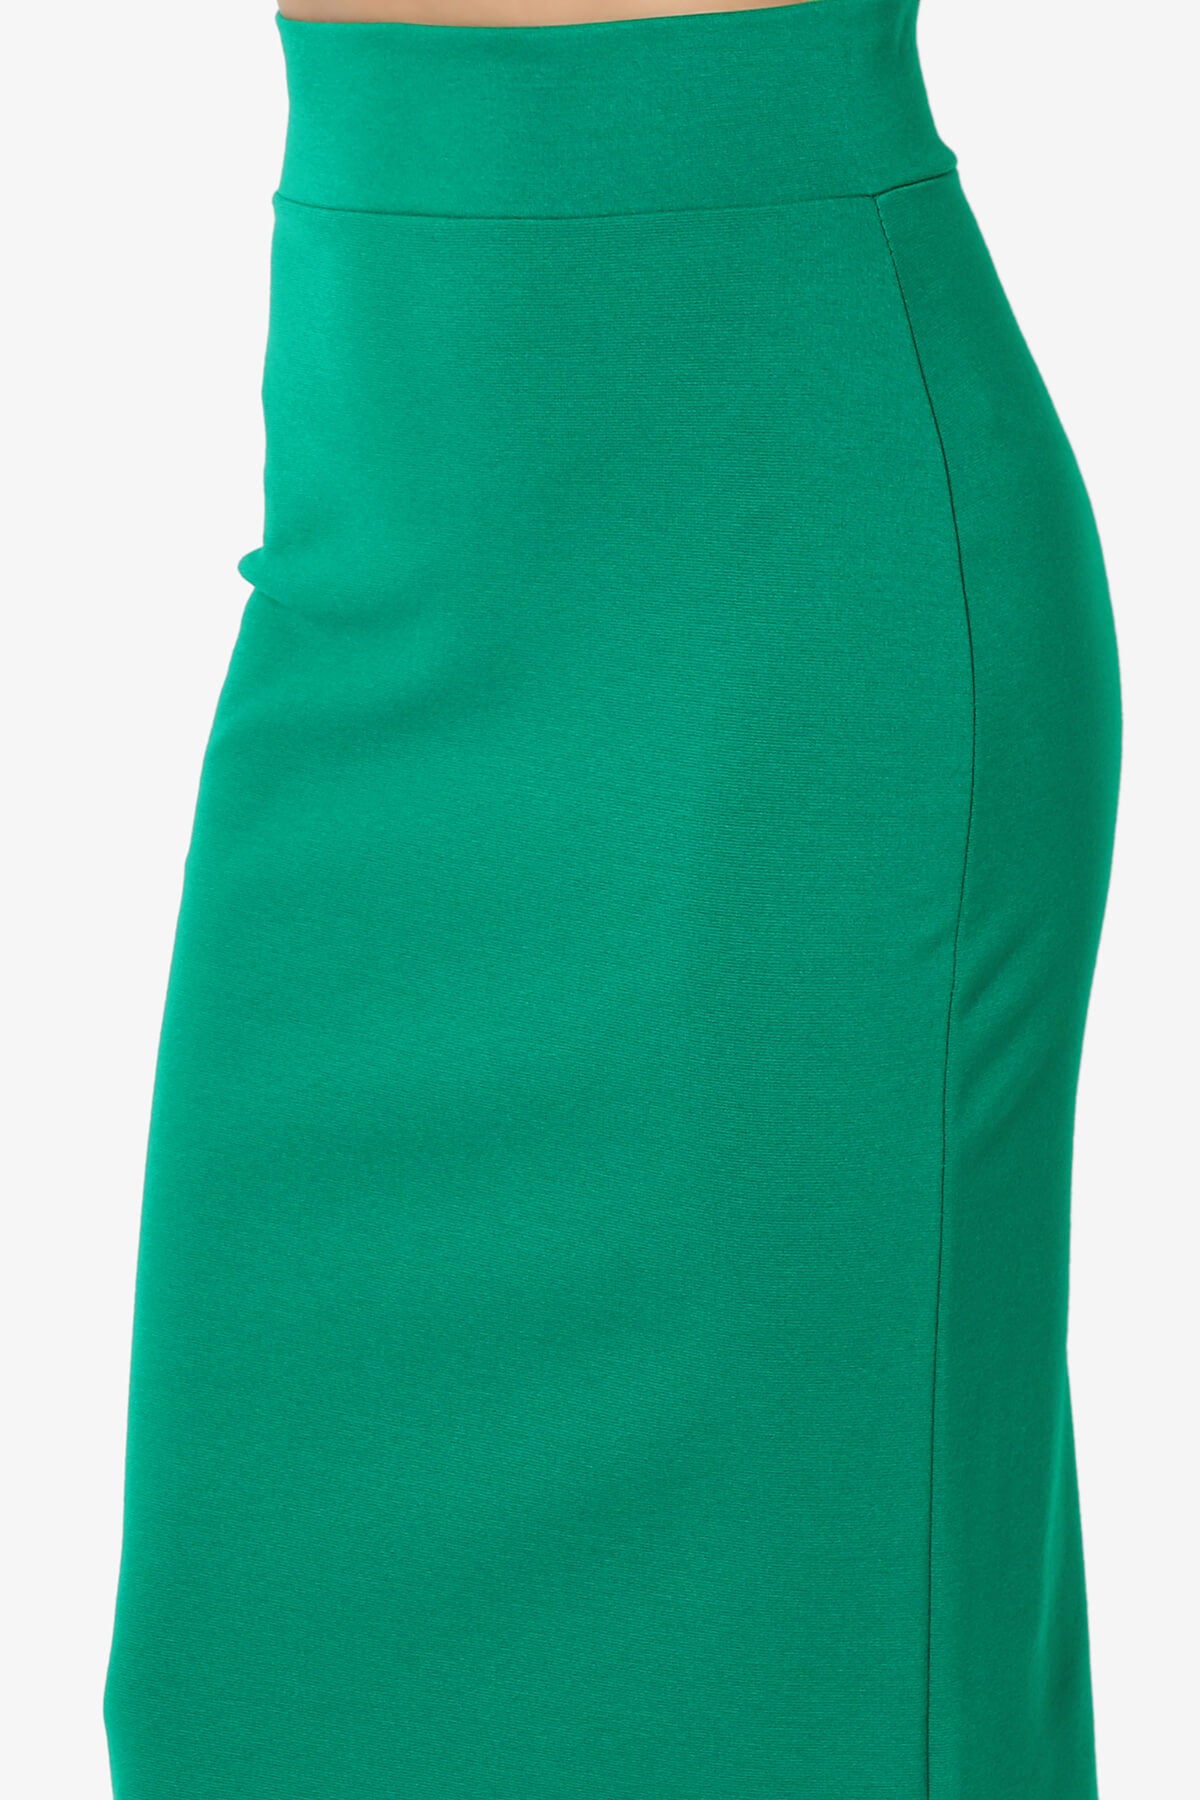 Carleta Mid Calf Pencil Skirt KELLY GREEN_5